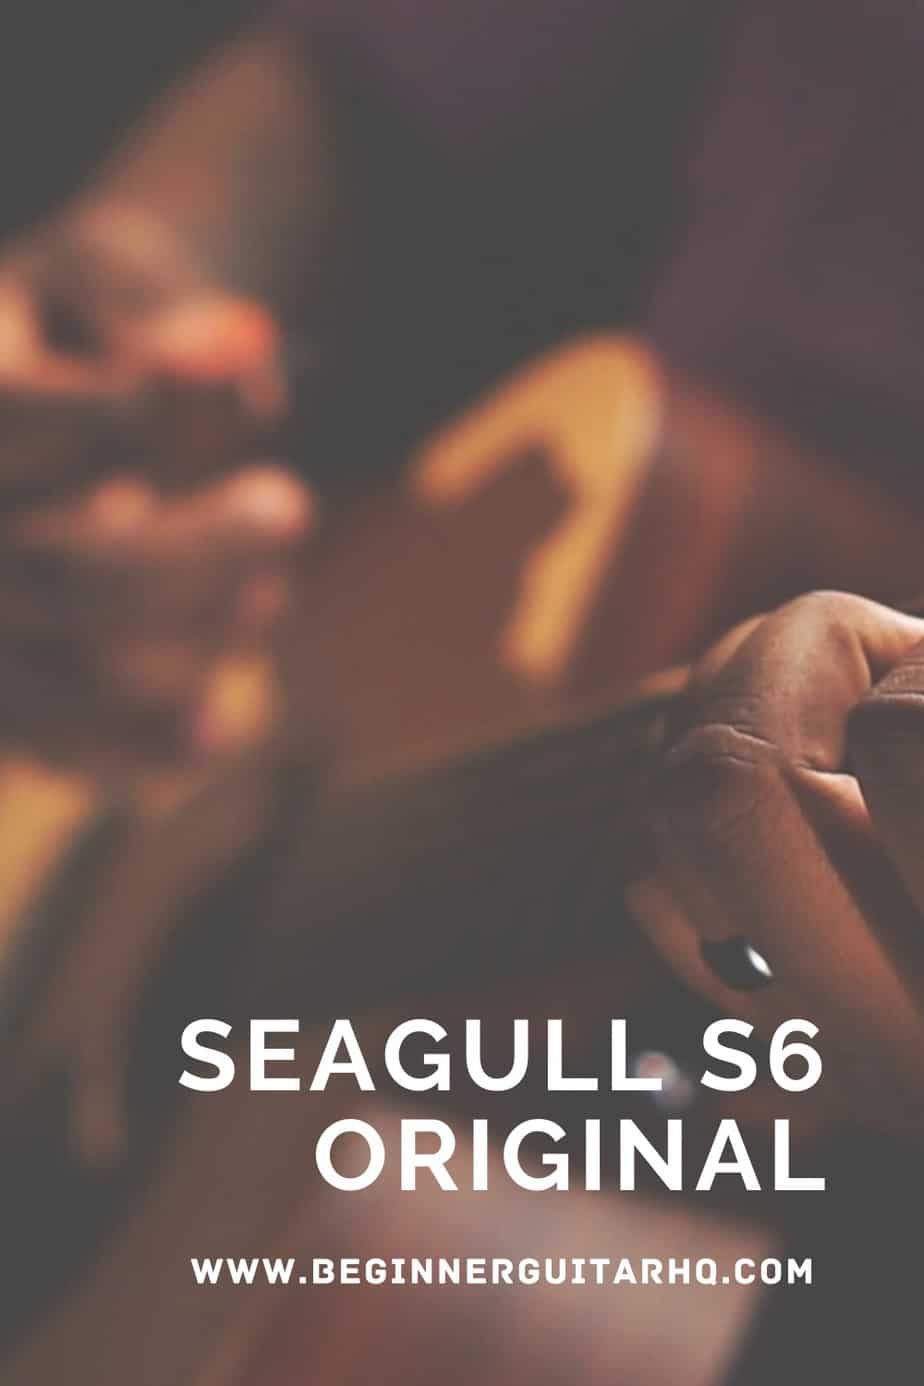 seagull s6 review reddit